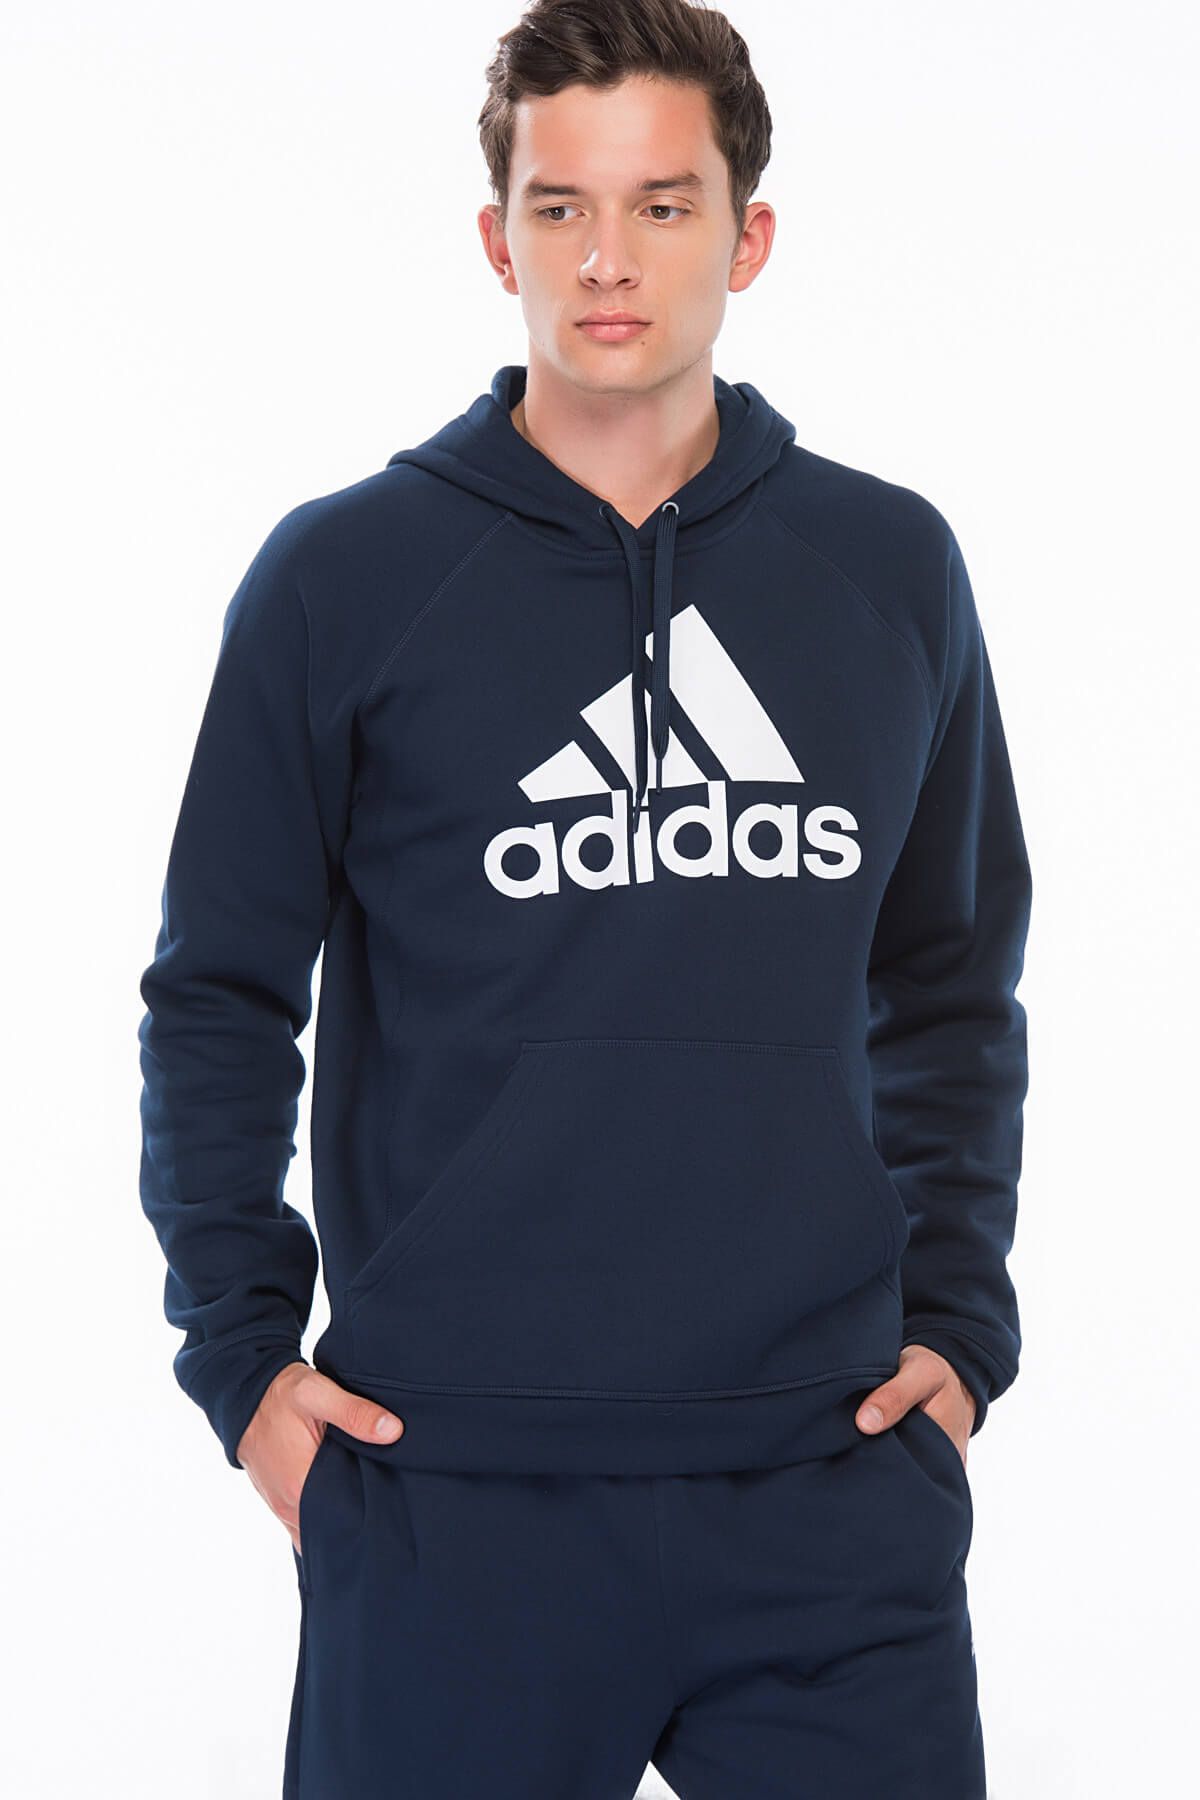 adidas Erkek Sweatshirt - Cot Flc Bos - CX4206